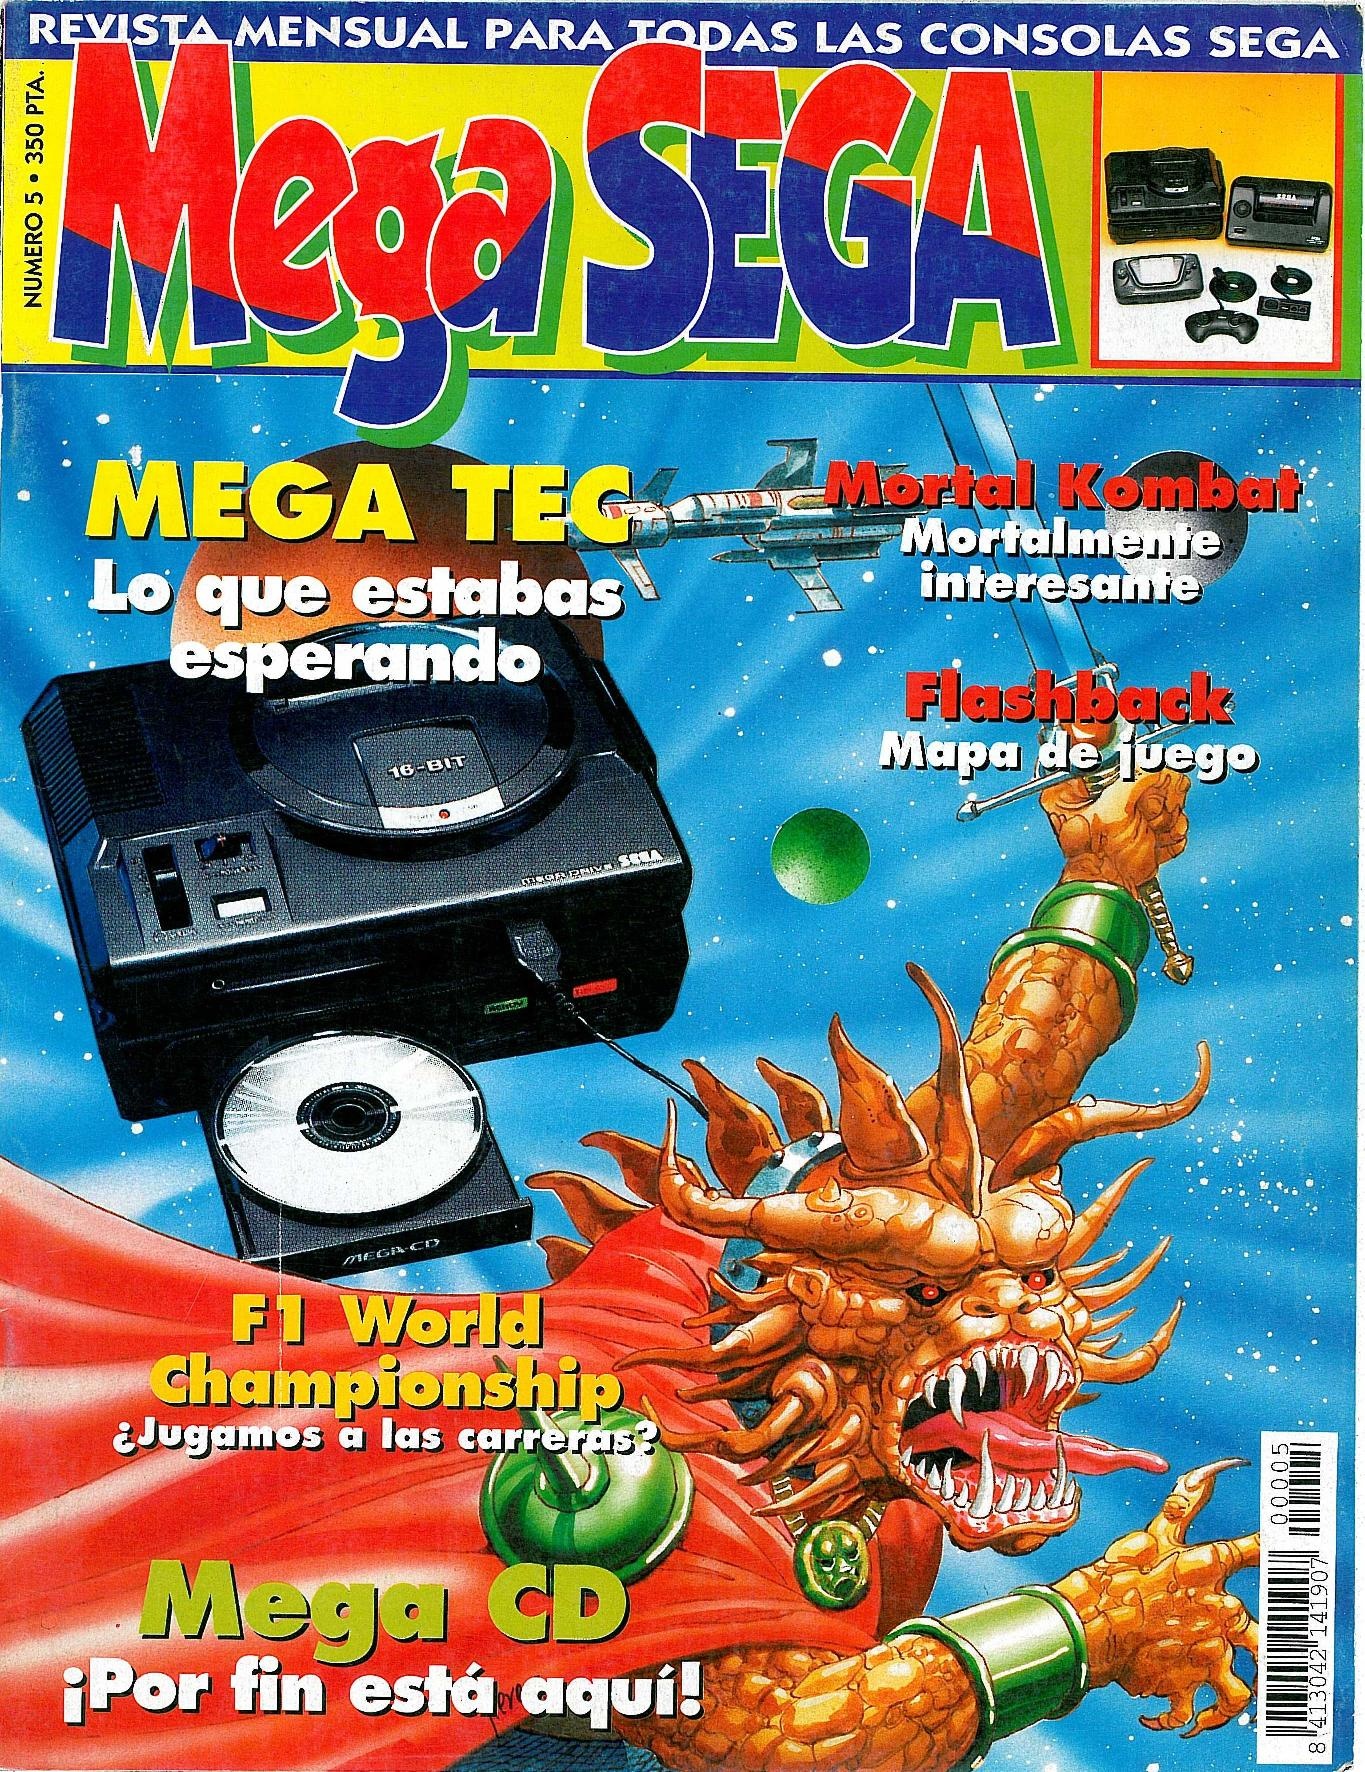 MegaSega ES 05.pdf